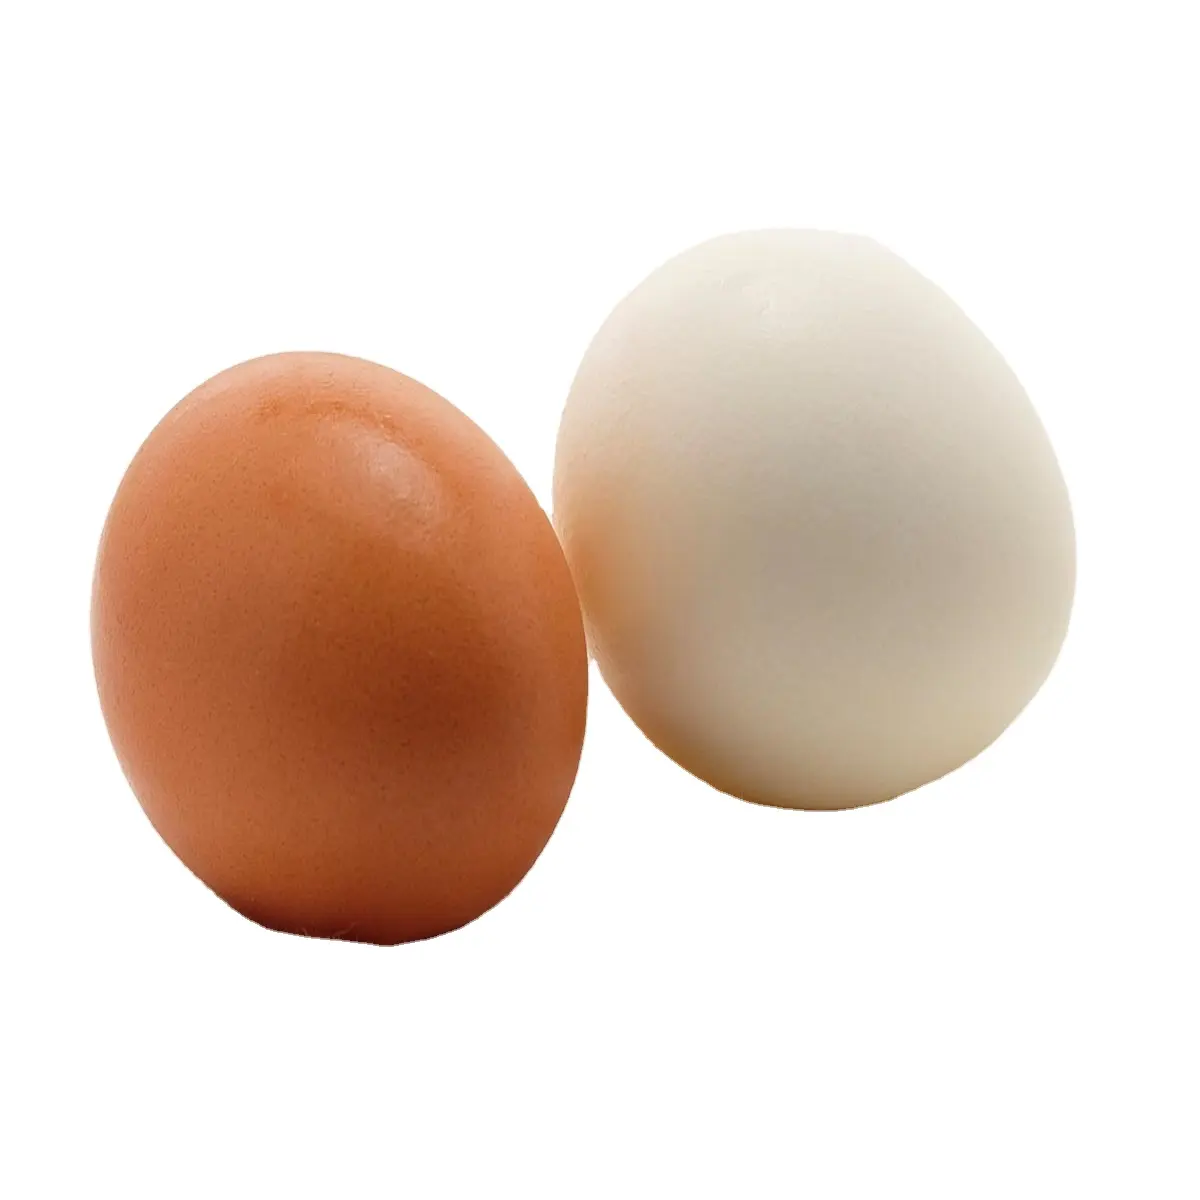 चीनी सफेद ब्राउन खेत चिकन अंडे/तालिका अंडे ब्राउन और सफेद खोल चिकन अंडे बिक्री के लिए